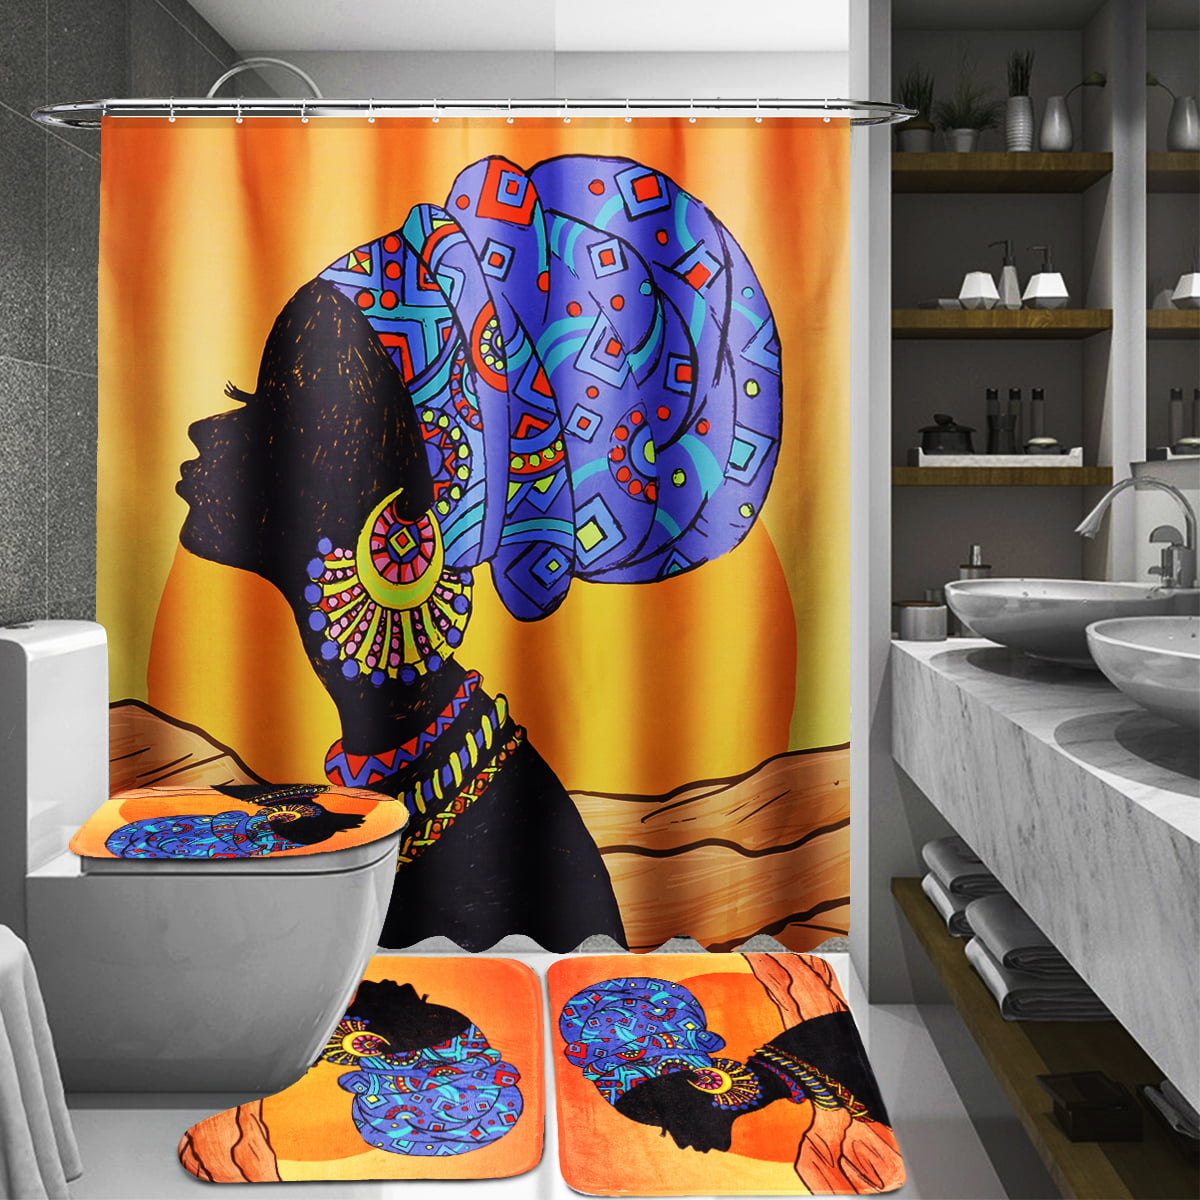 Red heavy truck head Shower Curtain bath decor Polyester Fabric &12 hooks 71x71” 